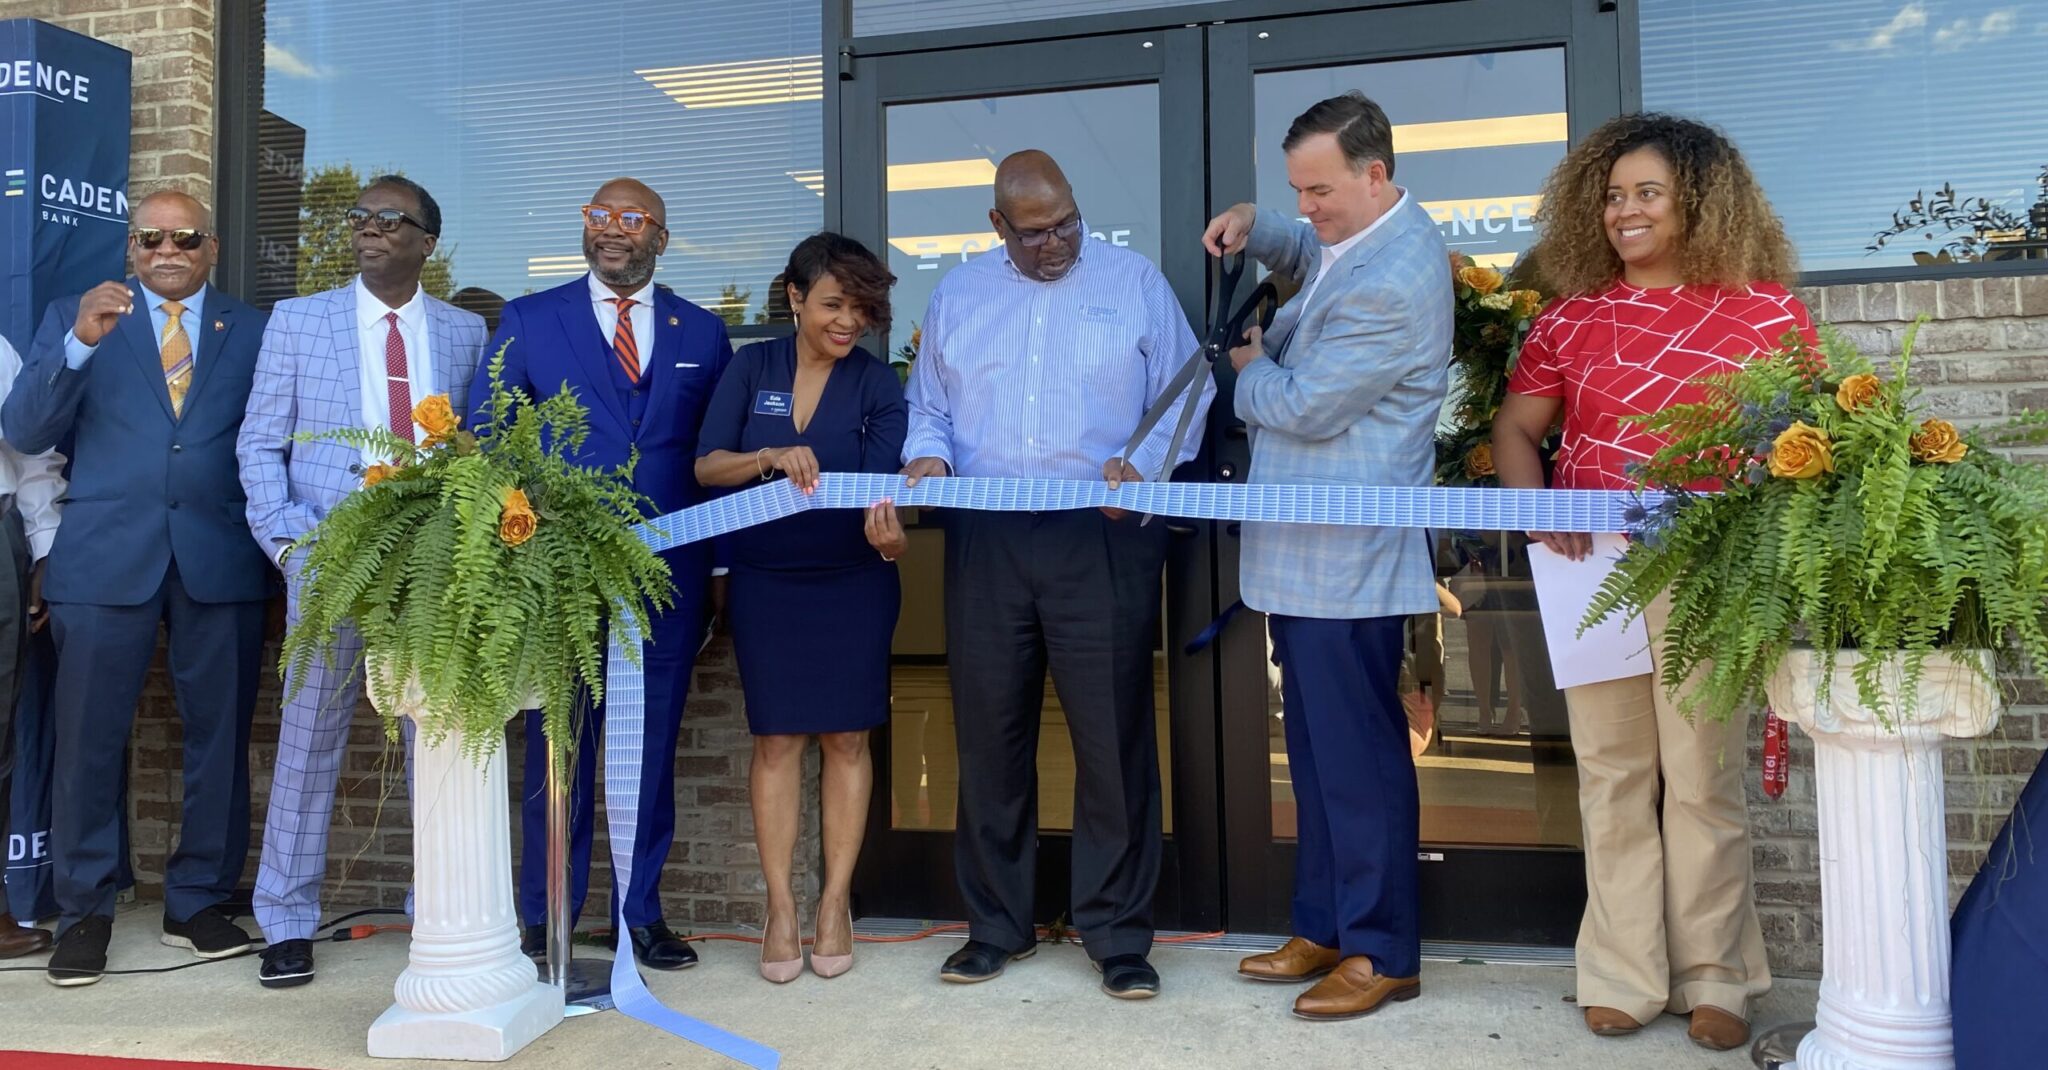 Cadence Bank opens full-service branch in Birmingham’s Titusville neighborhood